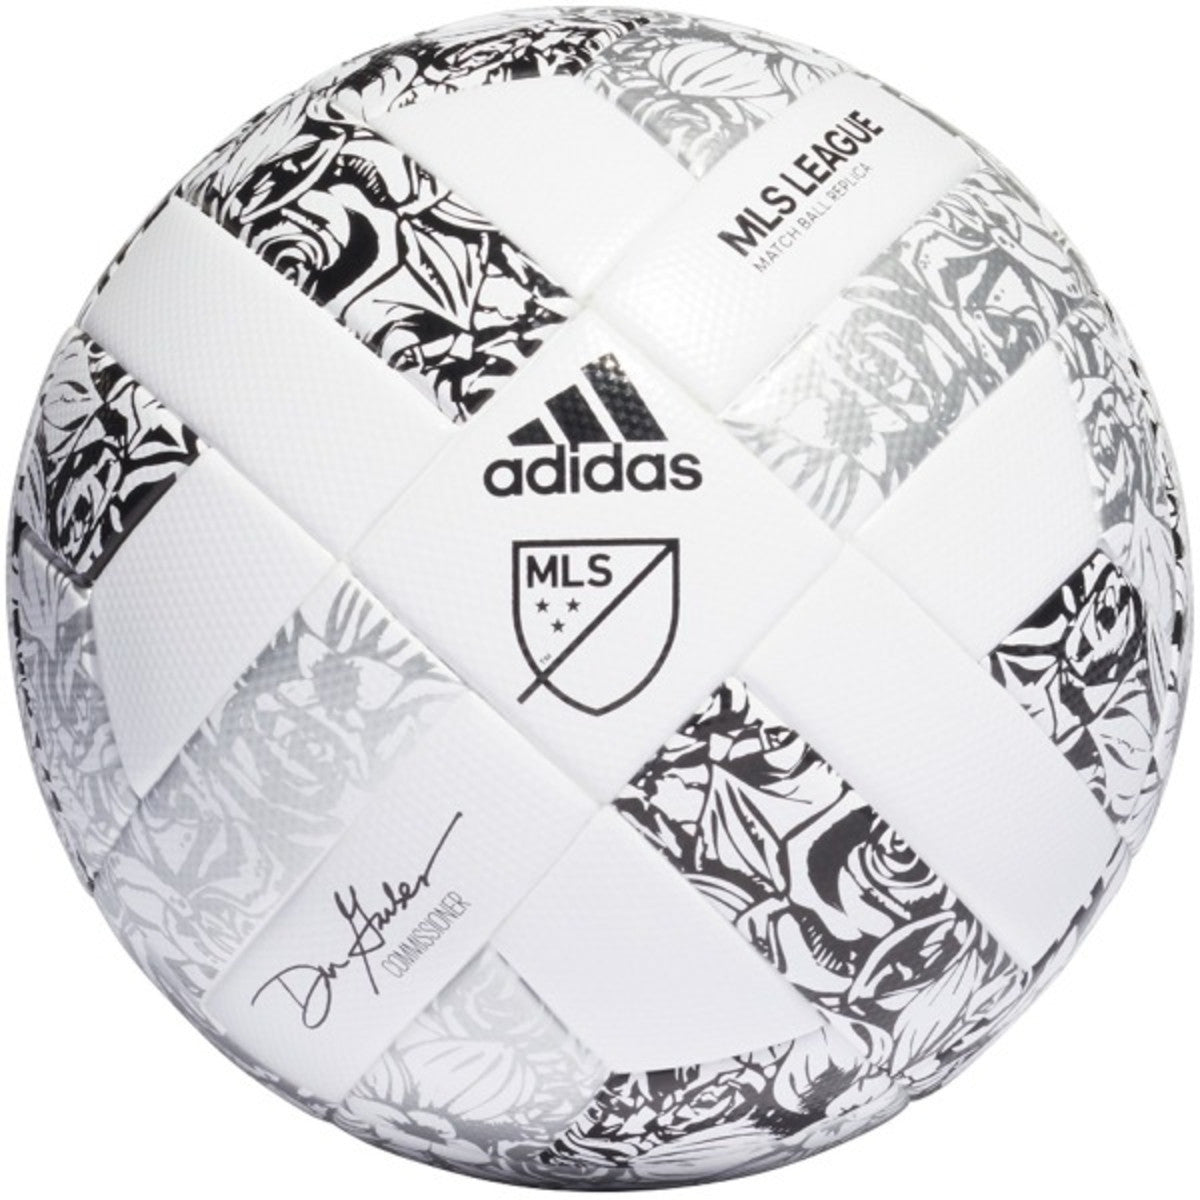 adidas MLS LGE NFHS - White/Silver/Black